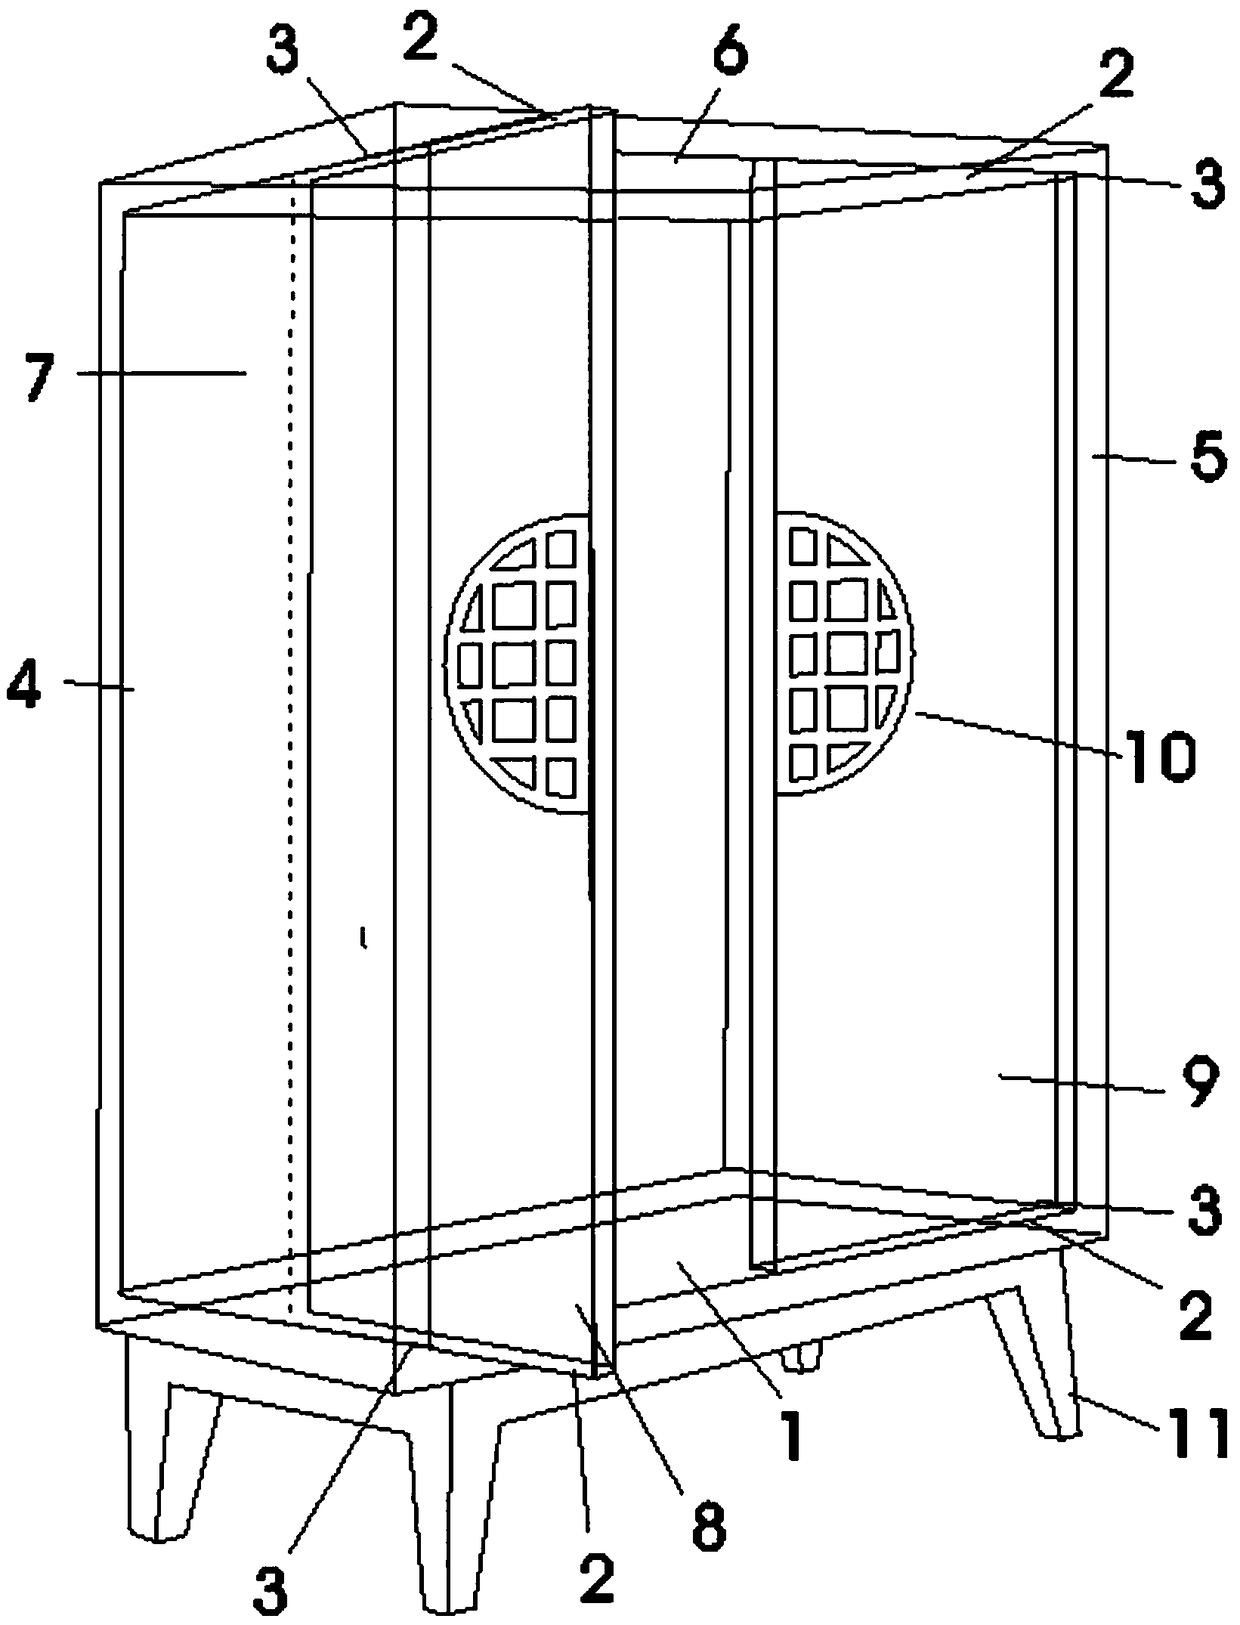 Semi-fixed structure capable of concealing cabinet door